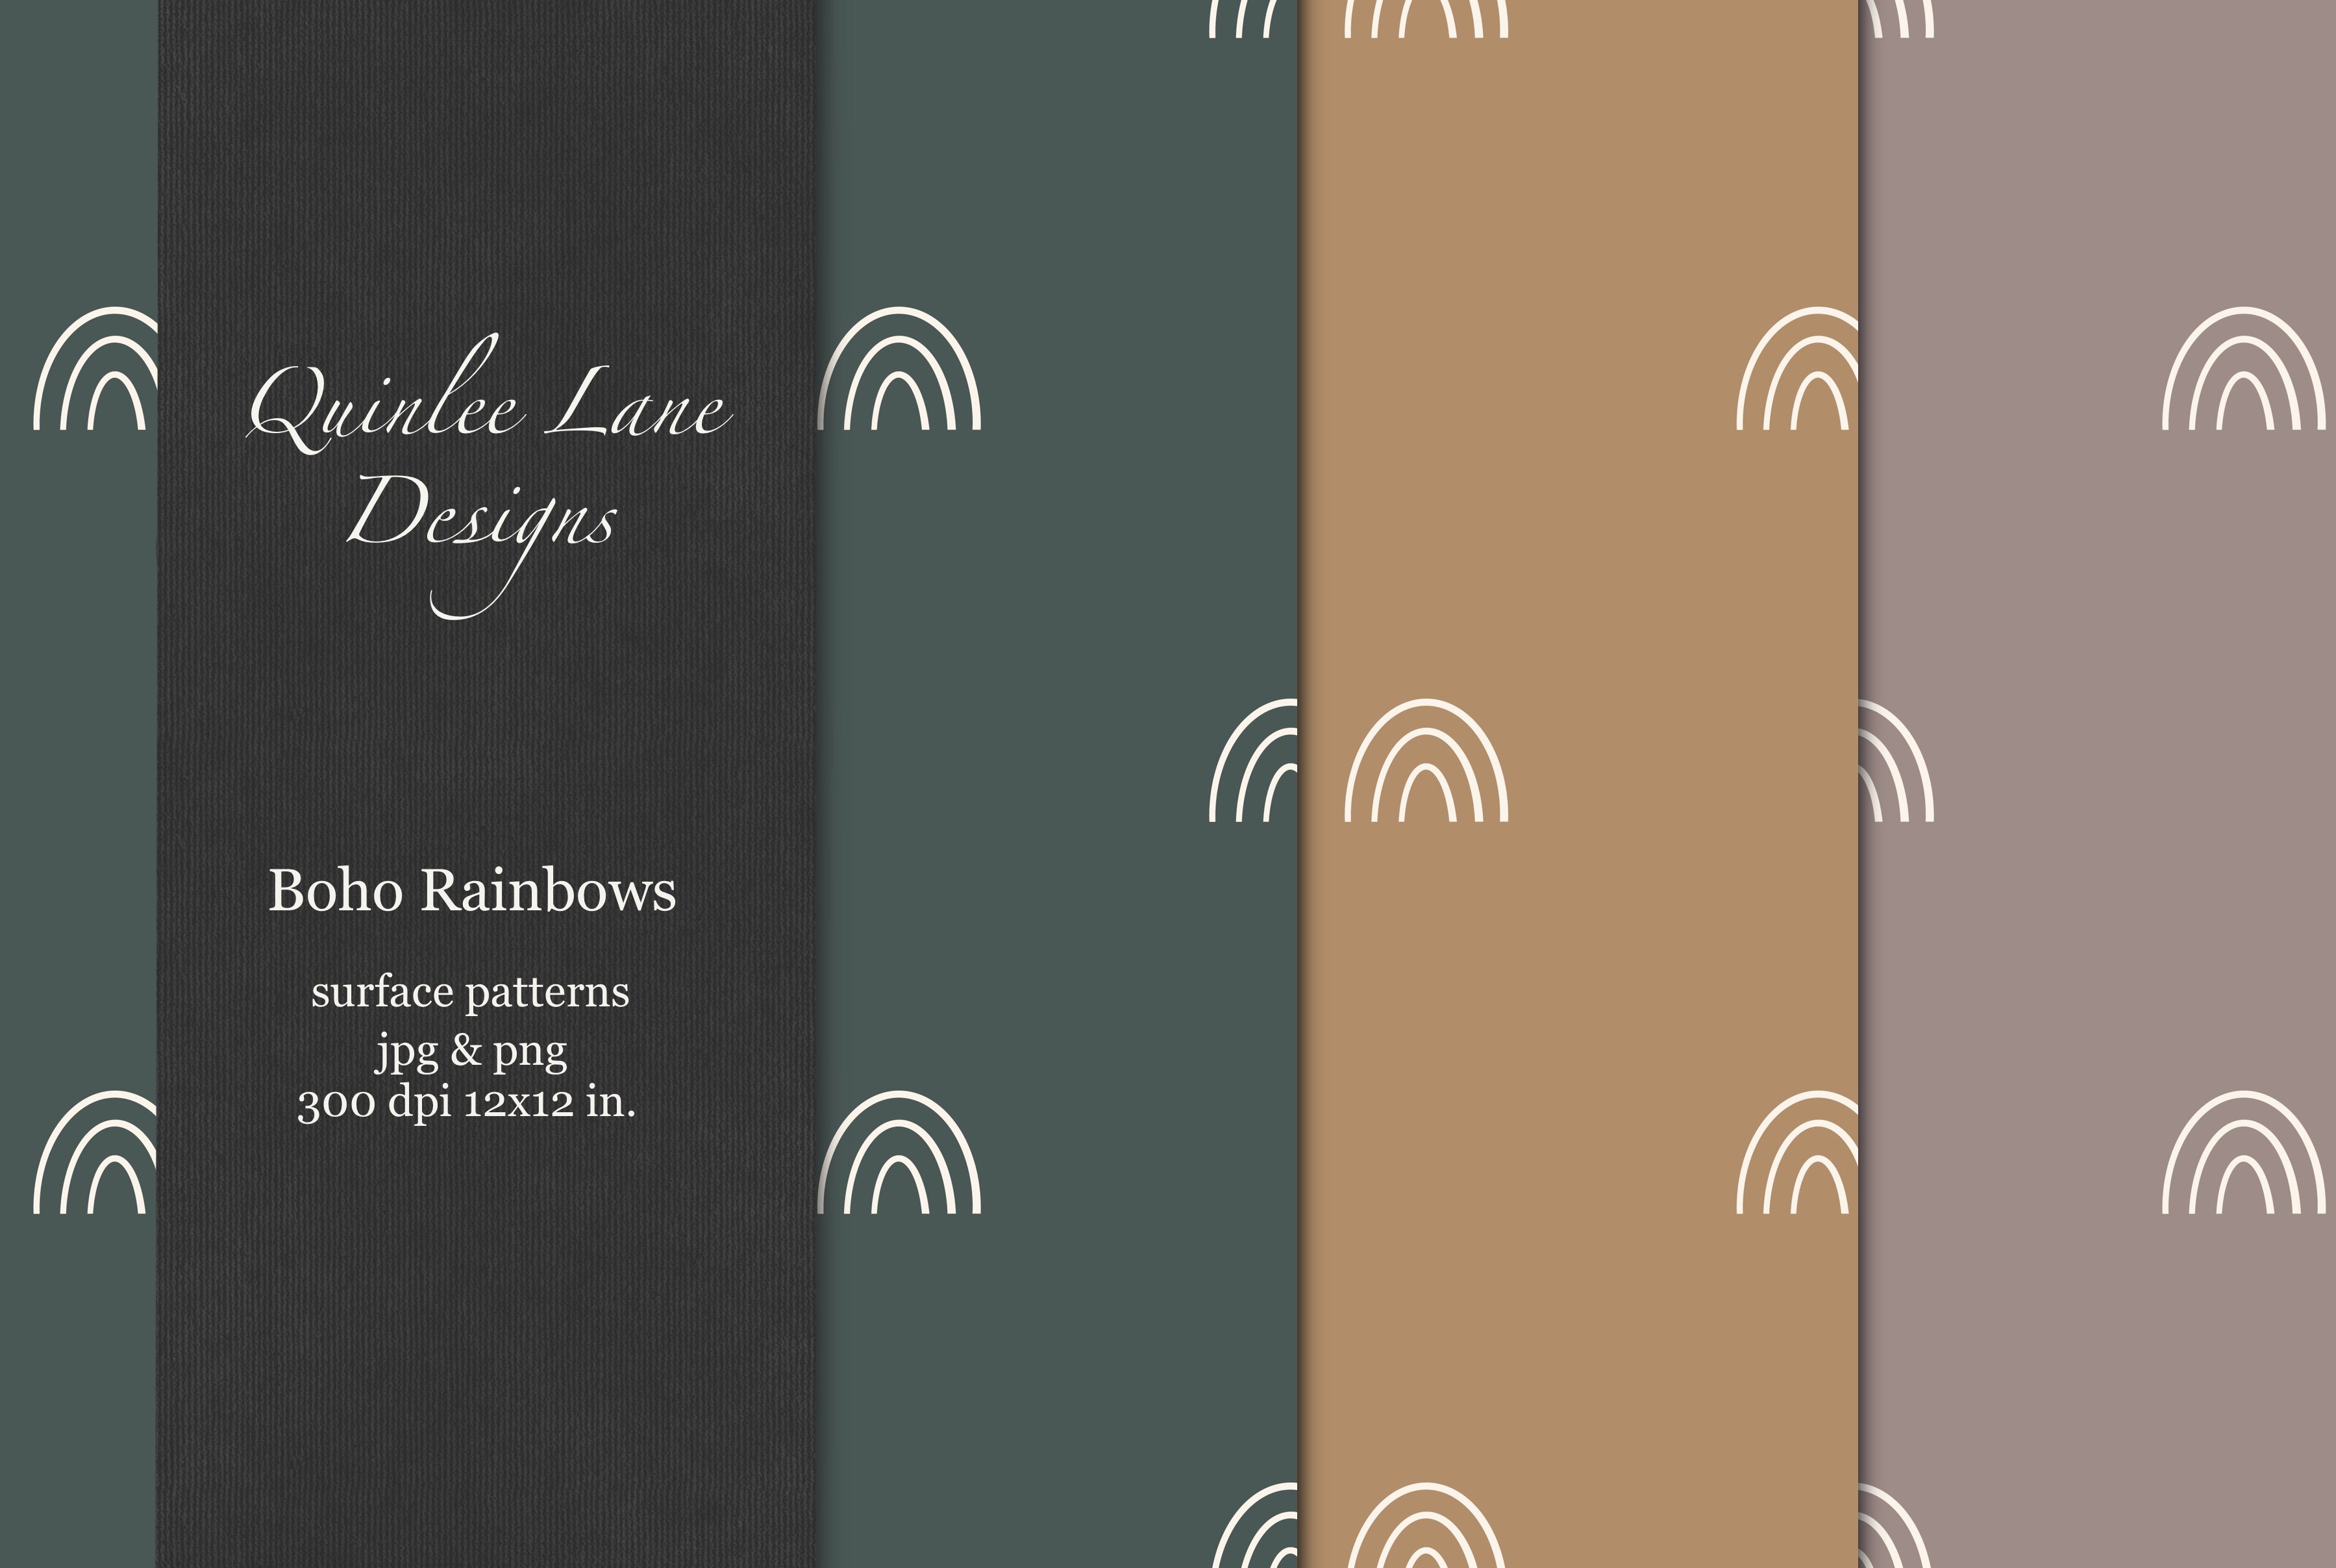 Boho Rainbow Surface Patterns cover image.